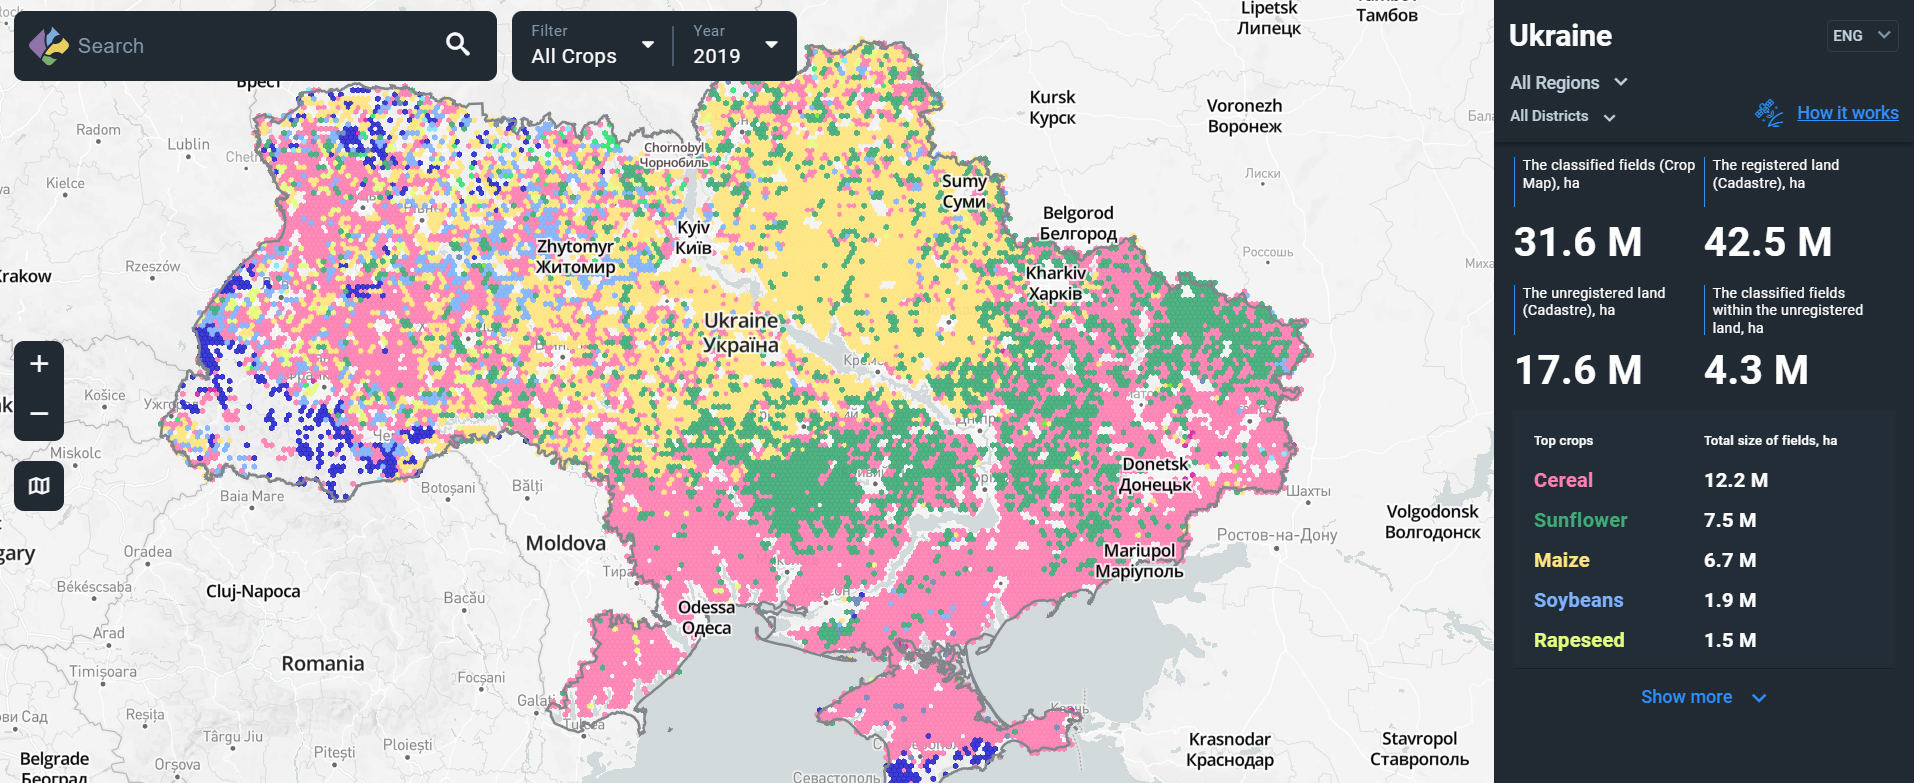 Ukraine Crops by Area